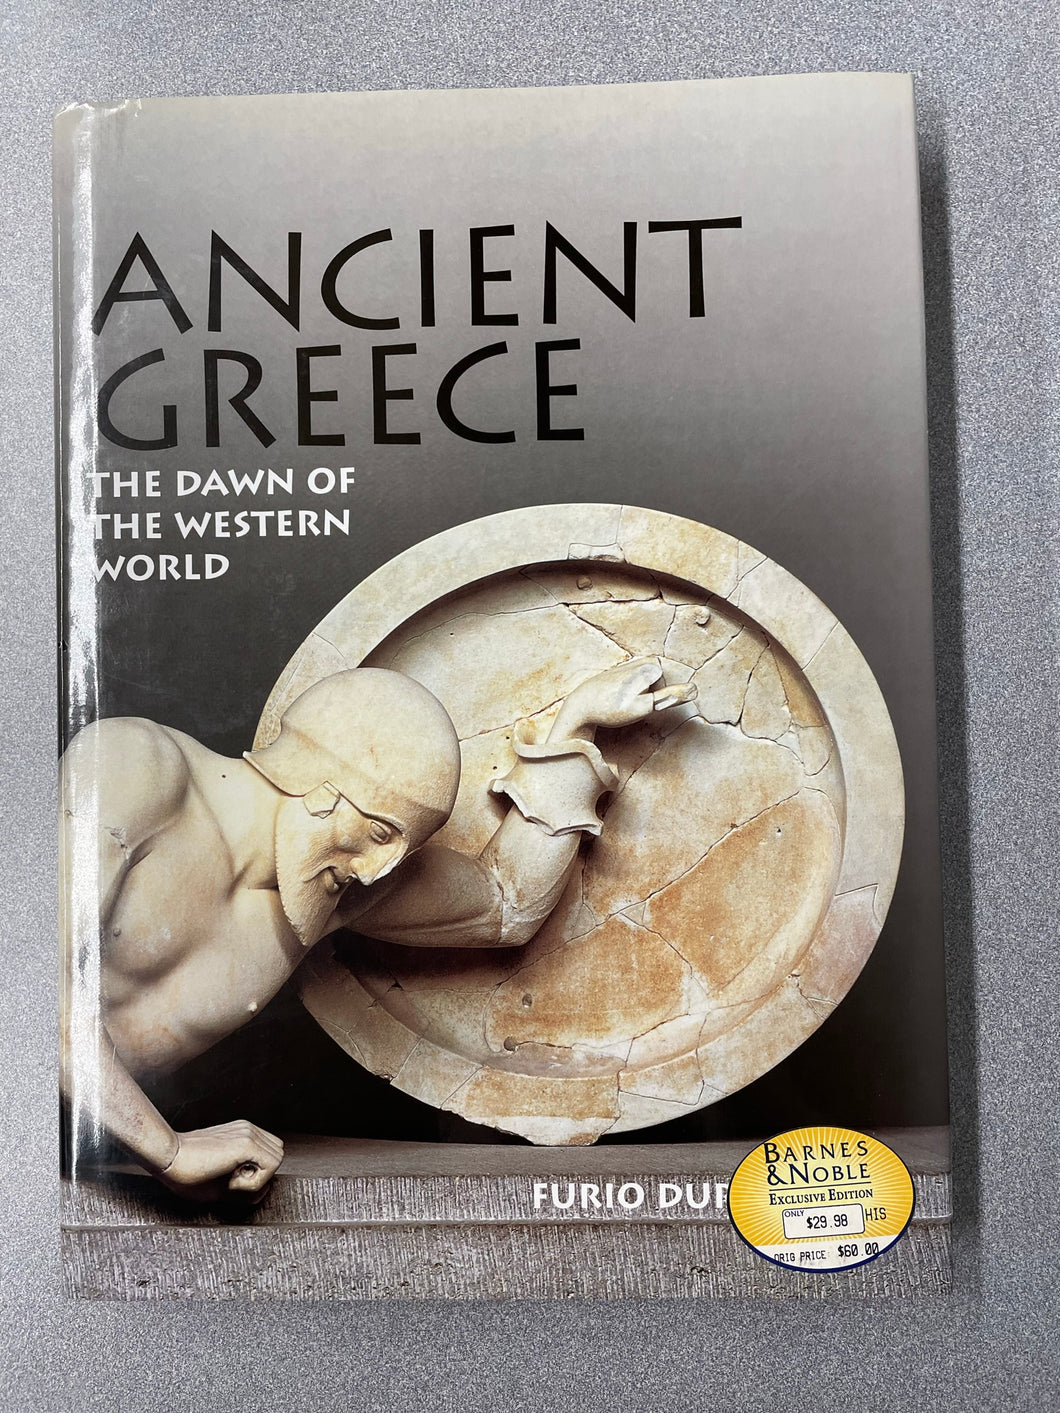 Ancient Greece: The Dawn of the Western World, Durando, Furio [1997] H 6/23